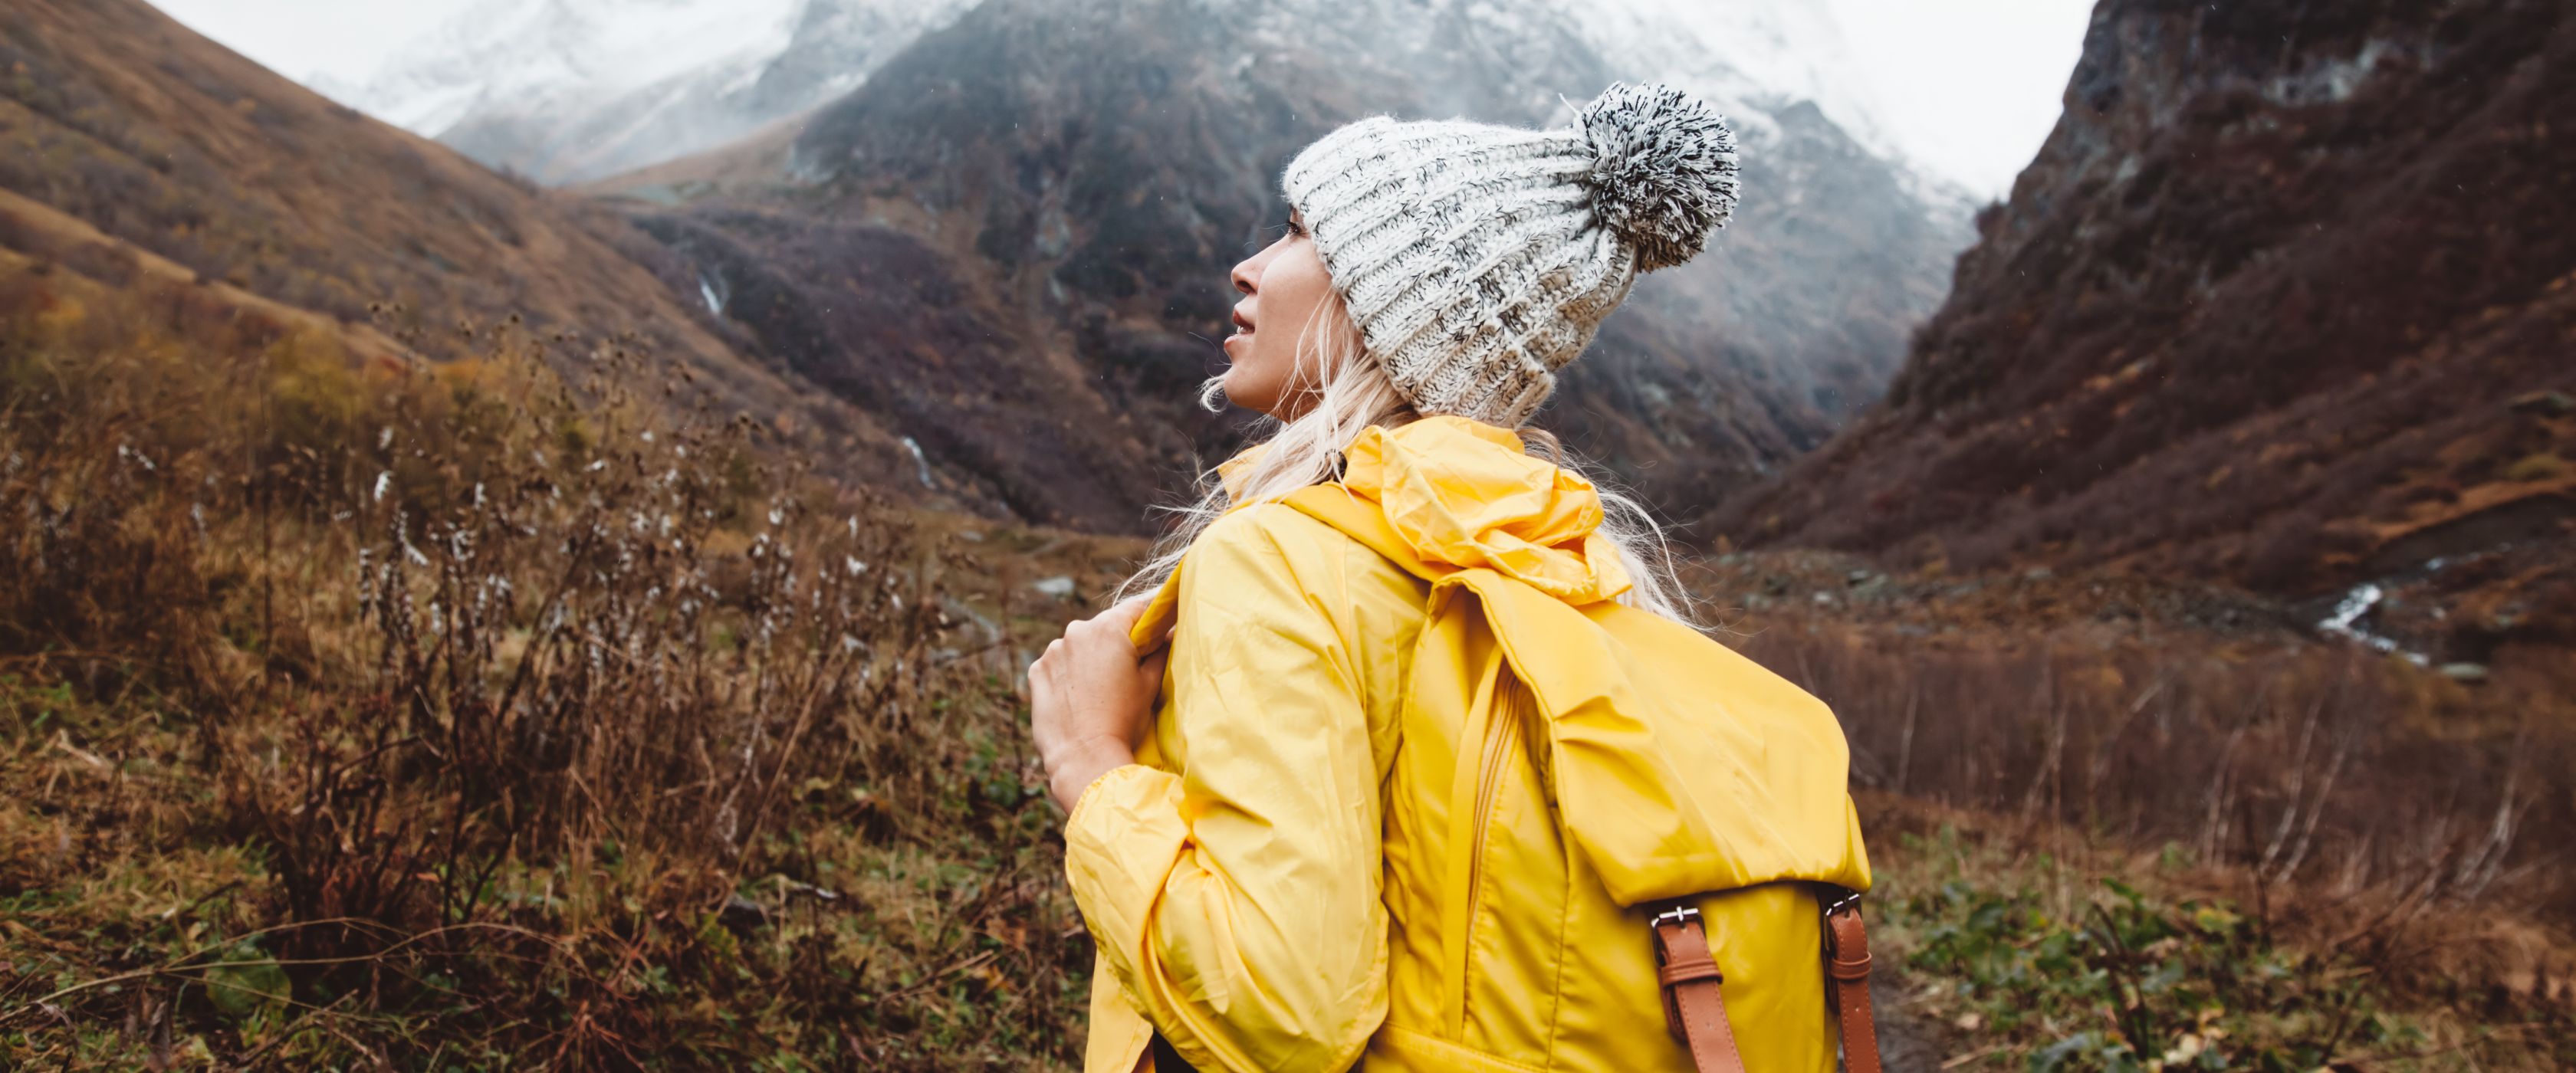 Woman in yellow raincoat with mountain 